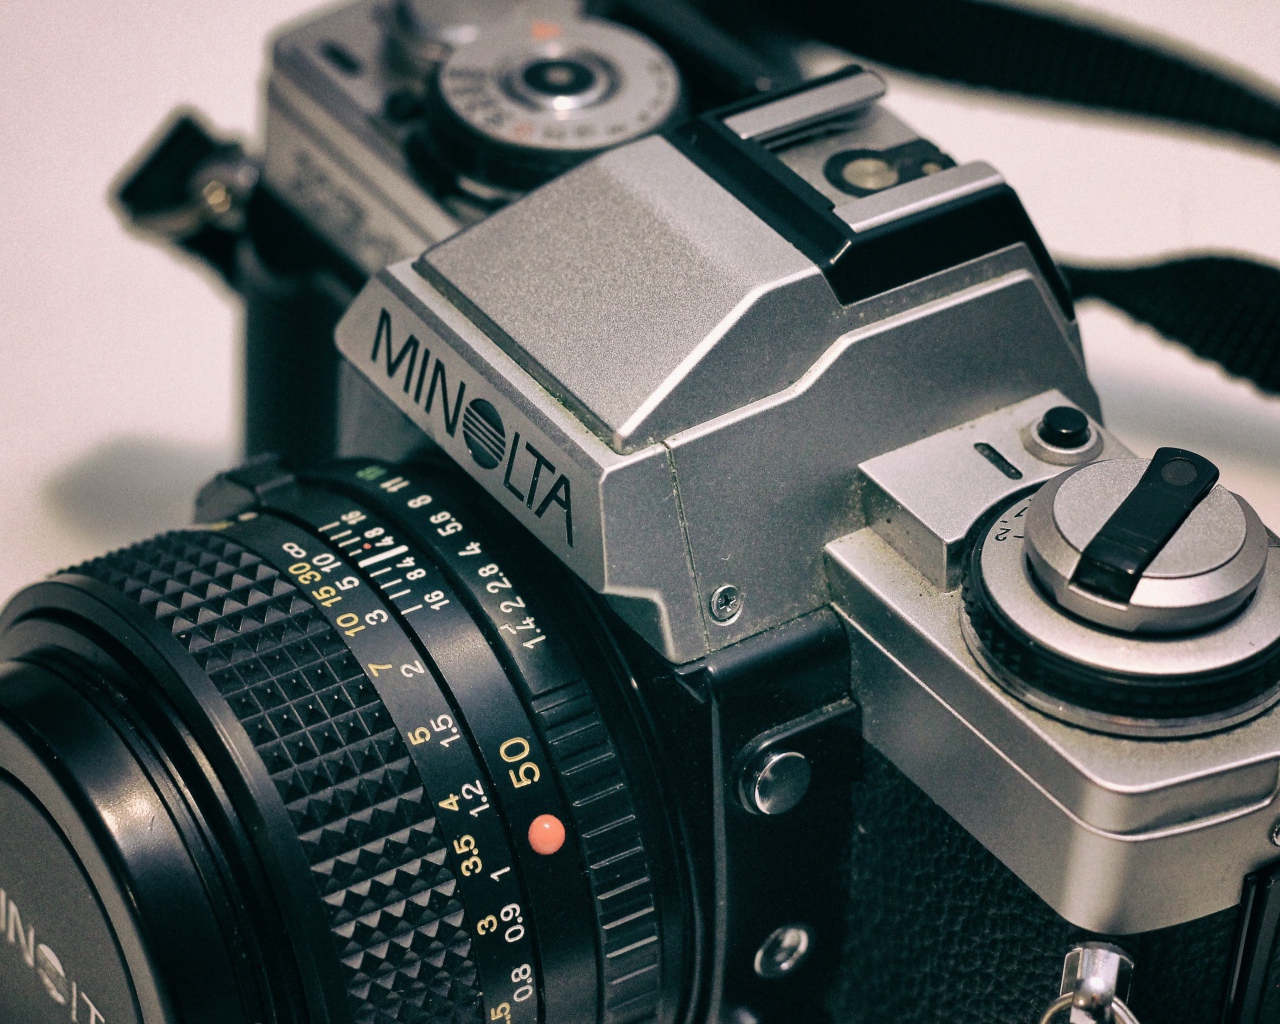 Old MINOLTA camera close-up